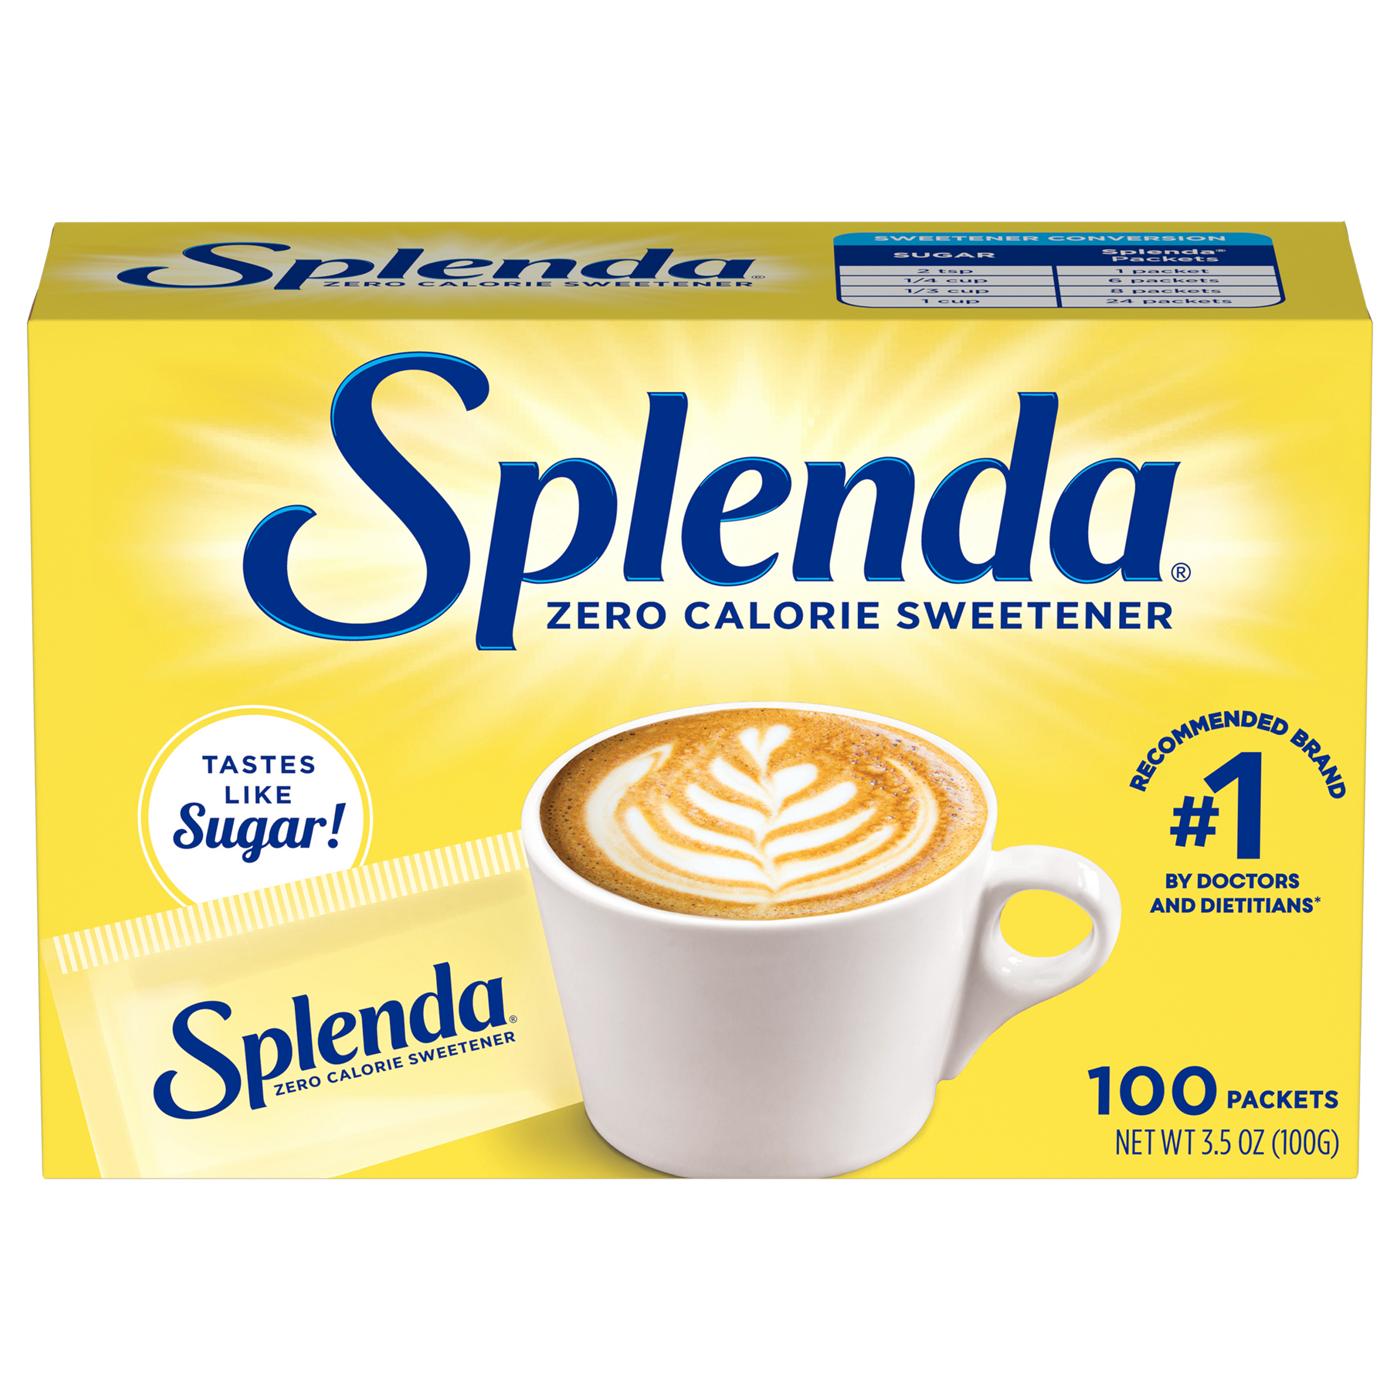 Splenda Zero Calorie Sweetener Packets; image 1 of 2